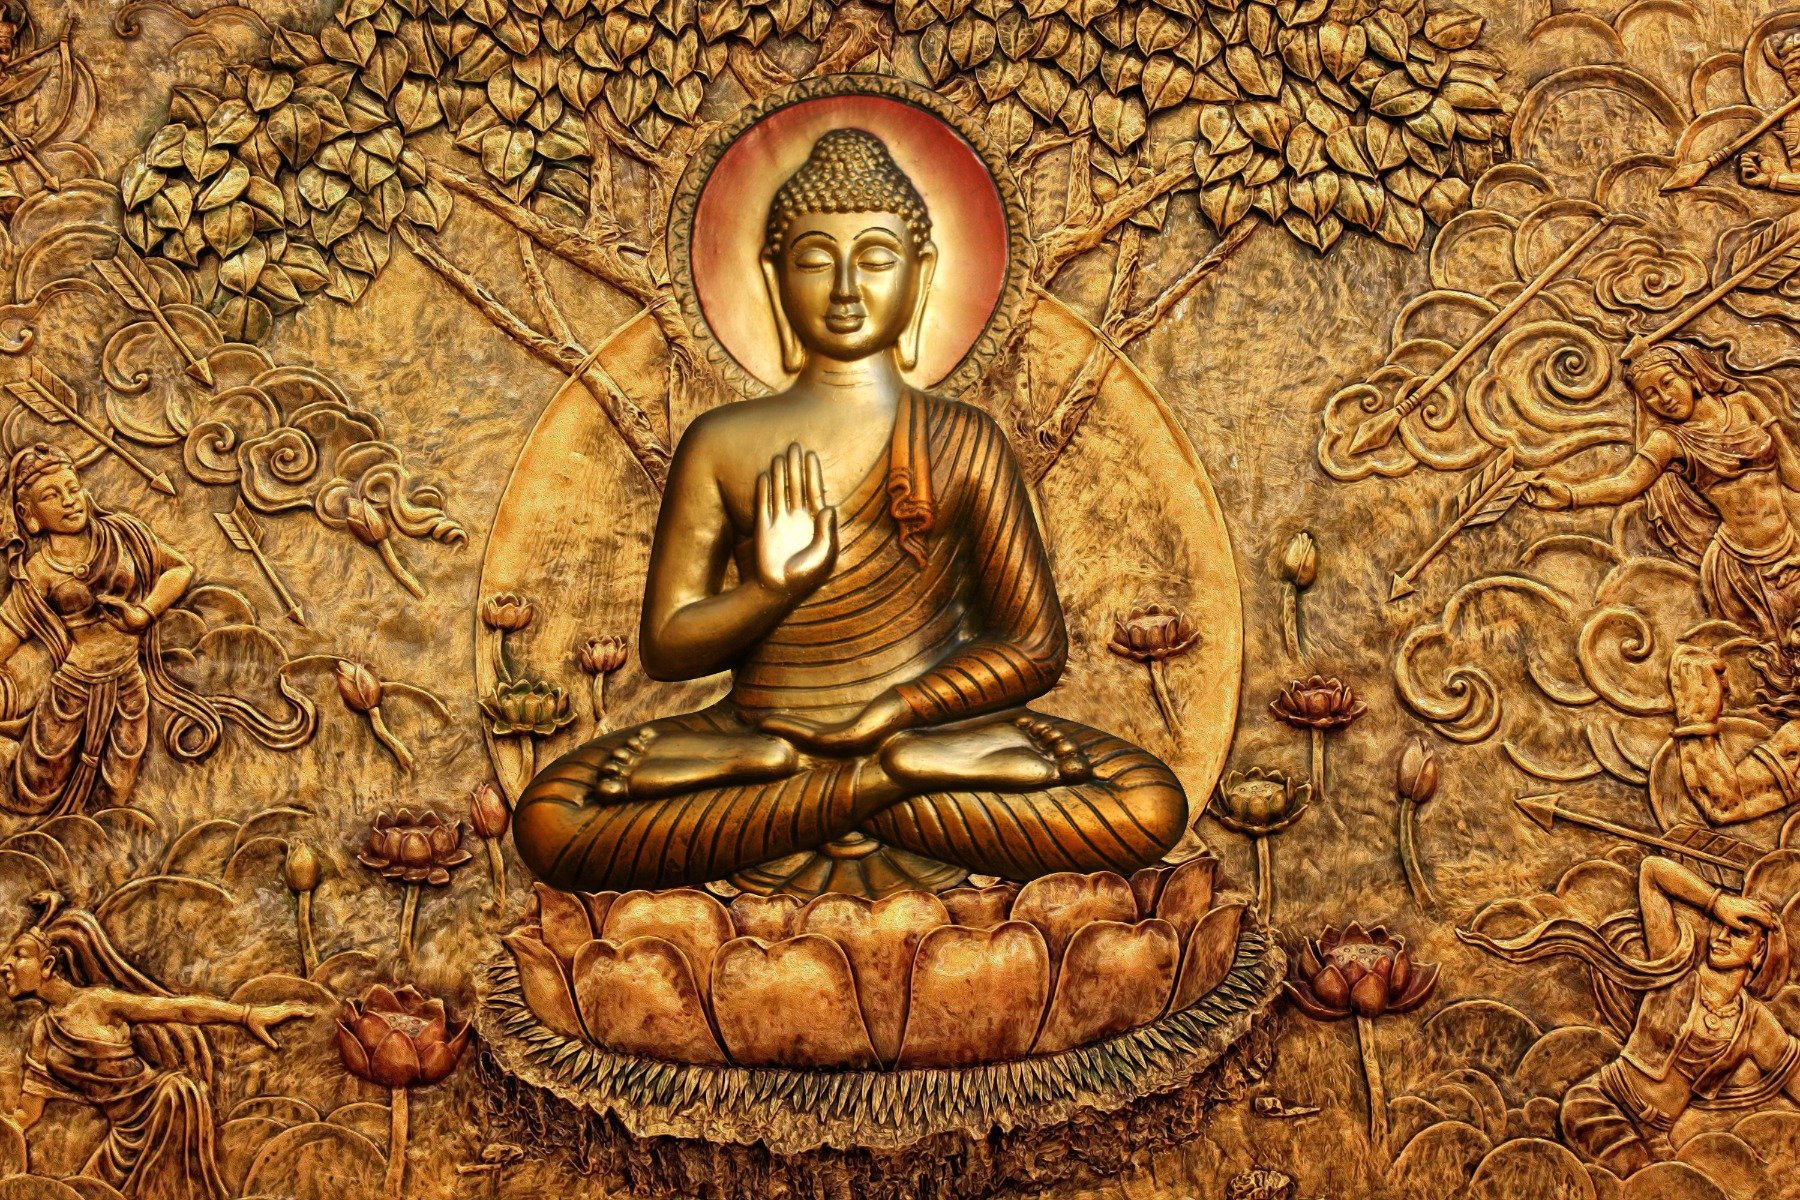 Buy Online  Meditating Lord Buddha Wallpaper 3D Buddha Wallpaper  Removable Peel  Stick Wallpaper Buddha Wall Mural Self Adhesive Vinyl  Wall Sticker in US